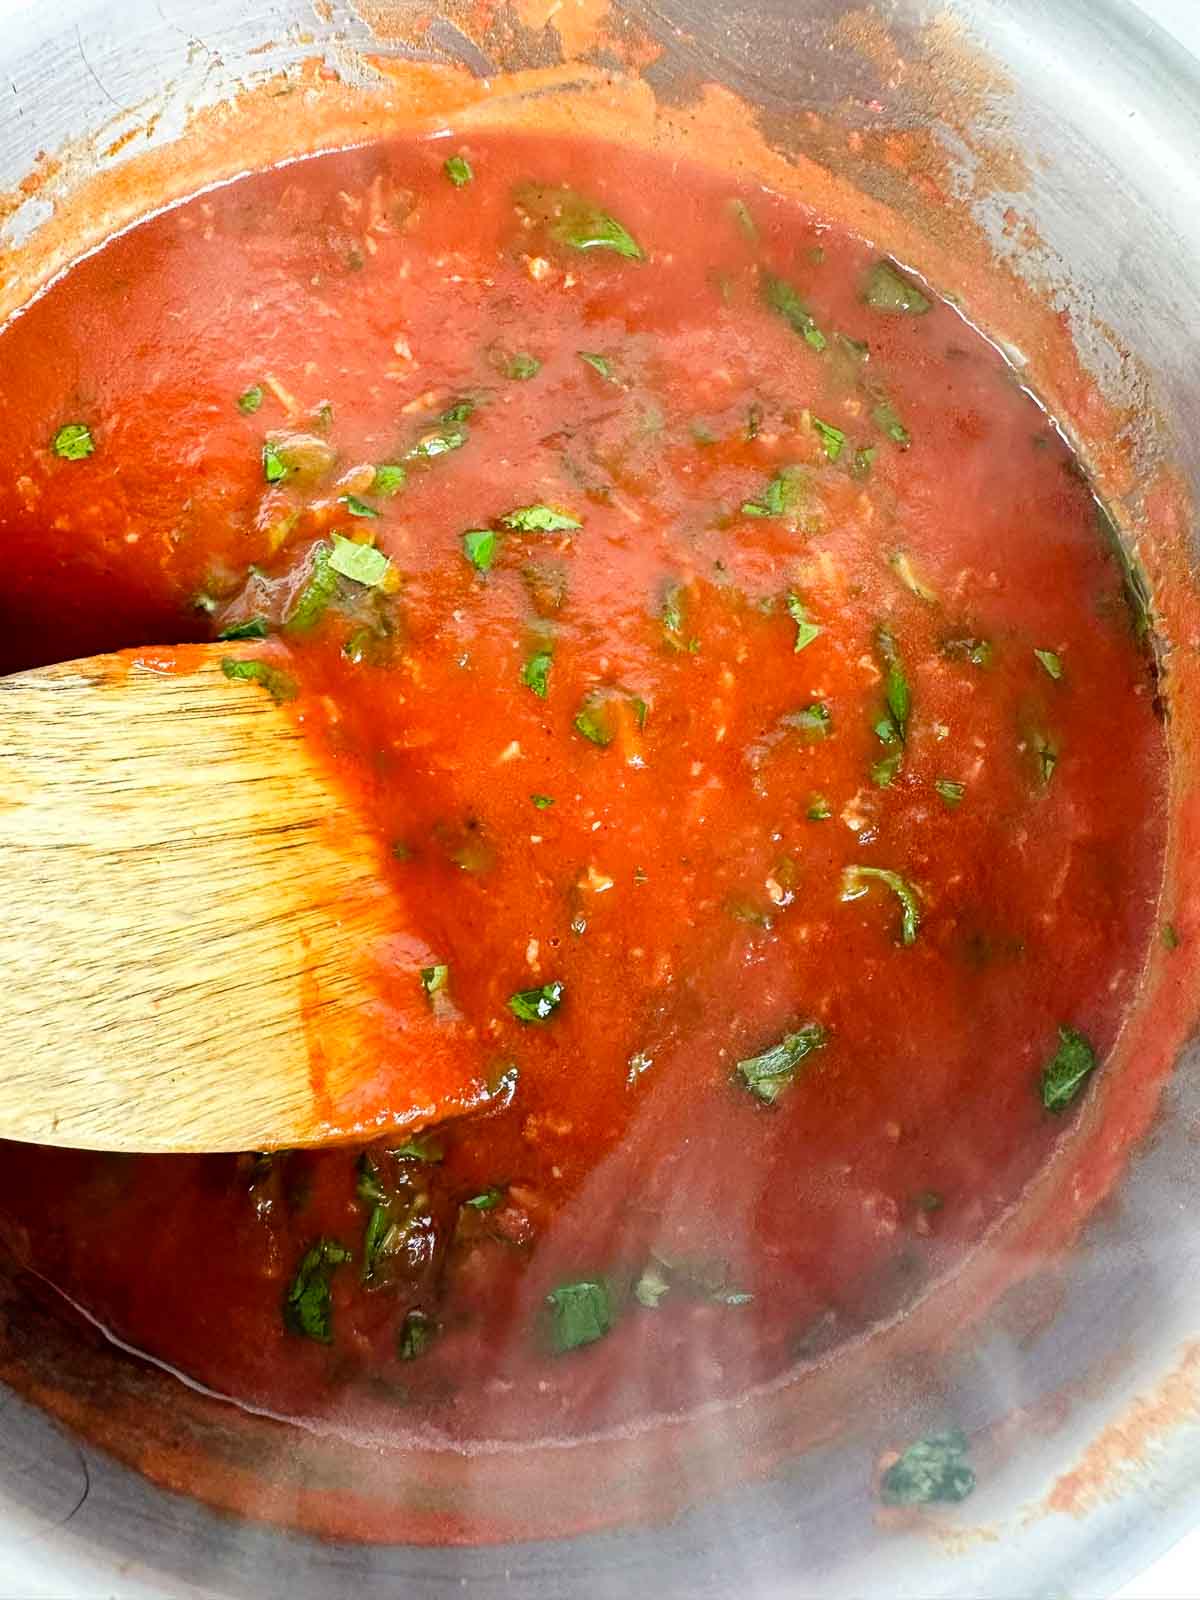 Stir the the basil into the spaghetti sauce.